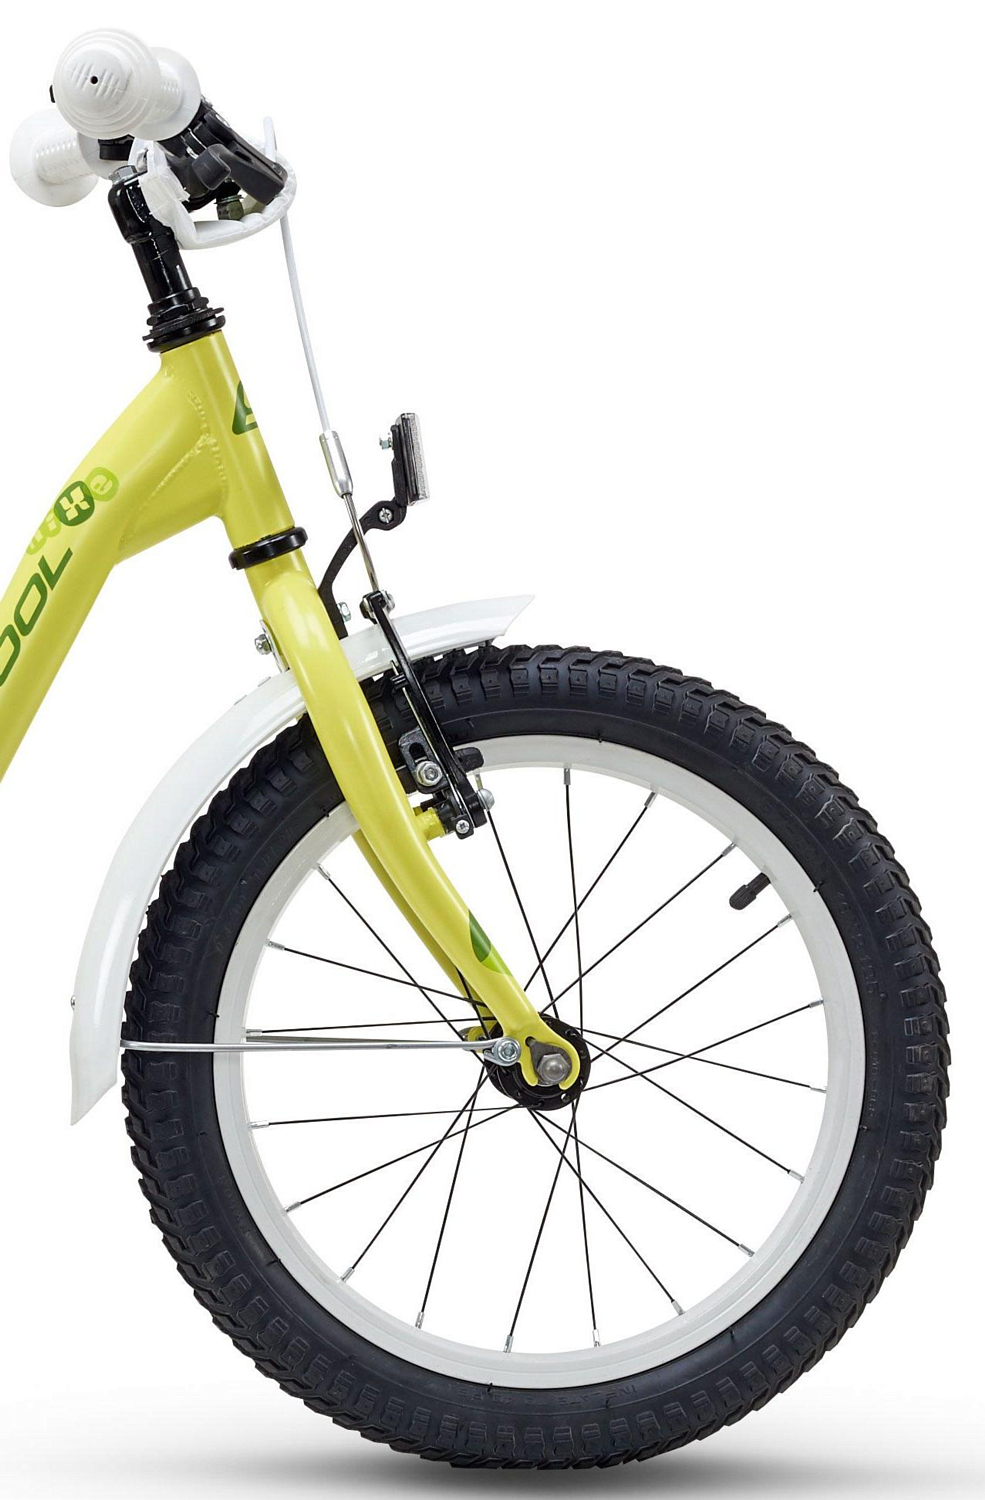 Велосипед Scool niXe Steel 16 2018 yellow/green